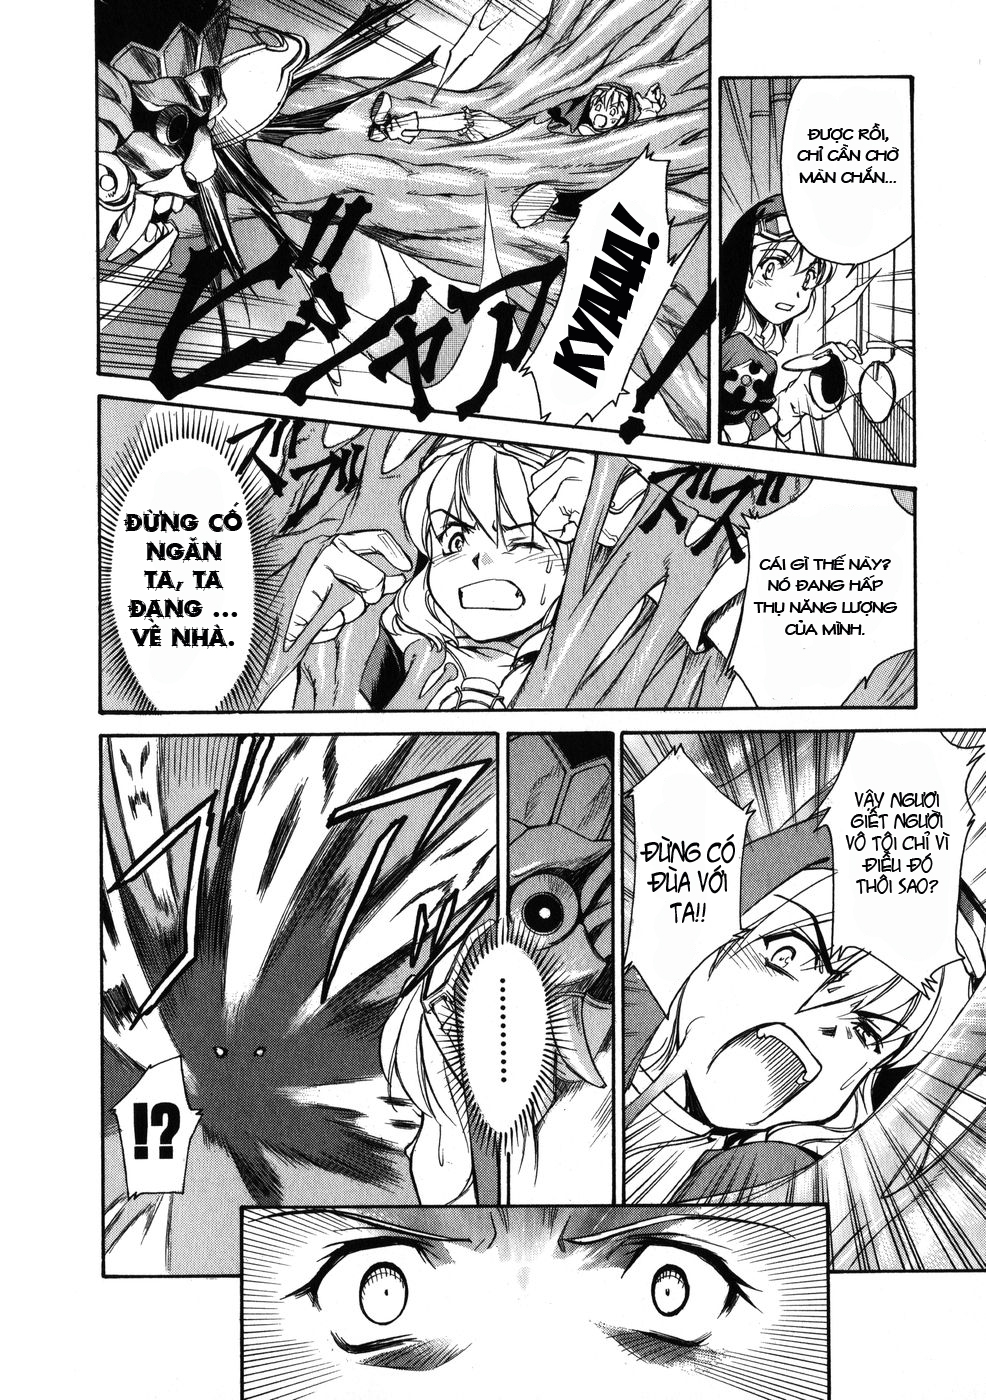 [Manga] Chrono Crusade (Đọc online tại SSF) - Page 2 CHRNO-CRUSADE-01-026